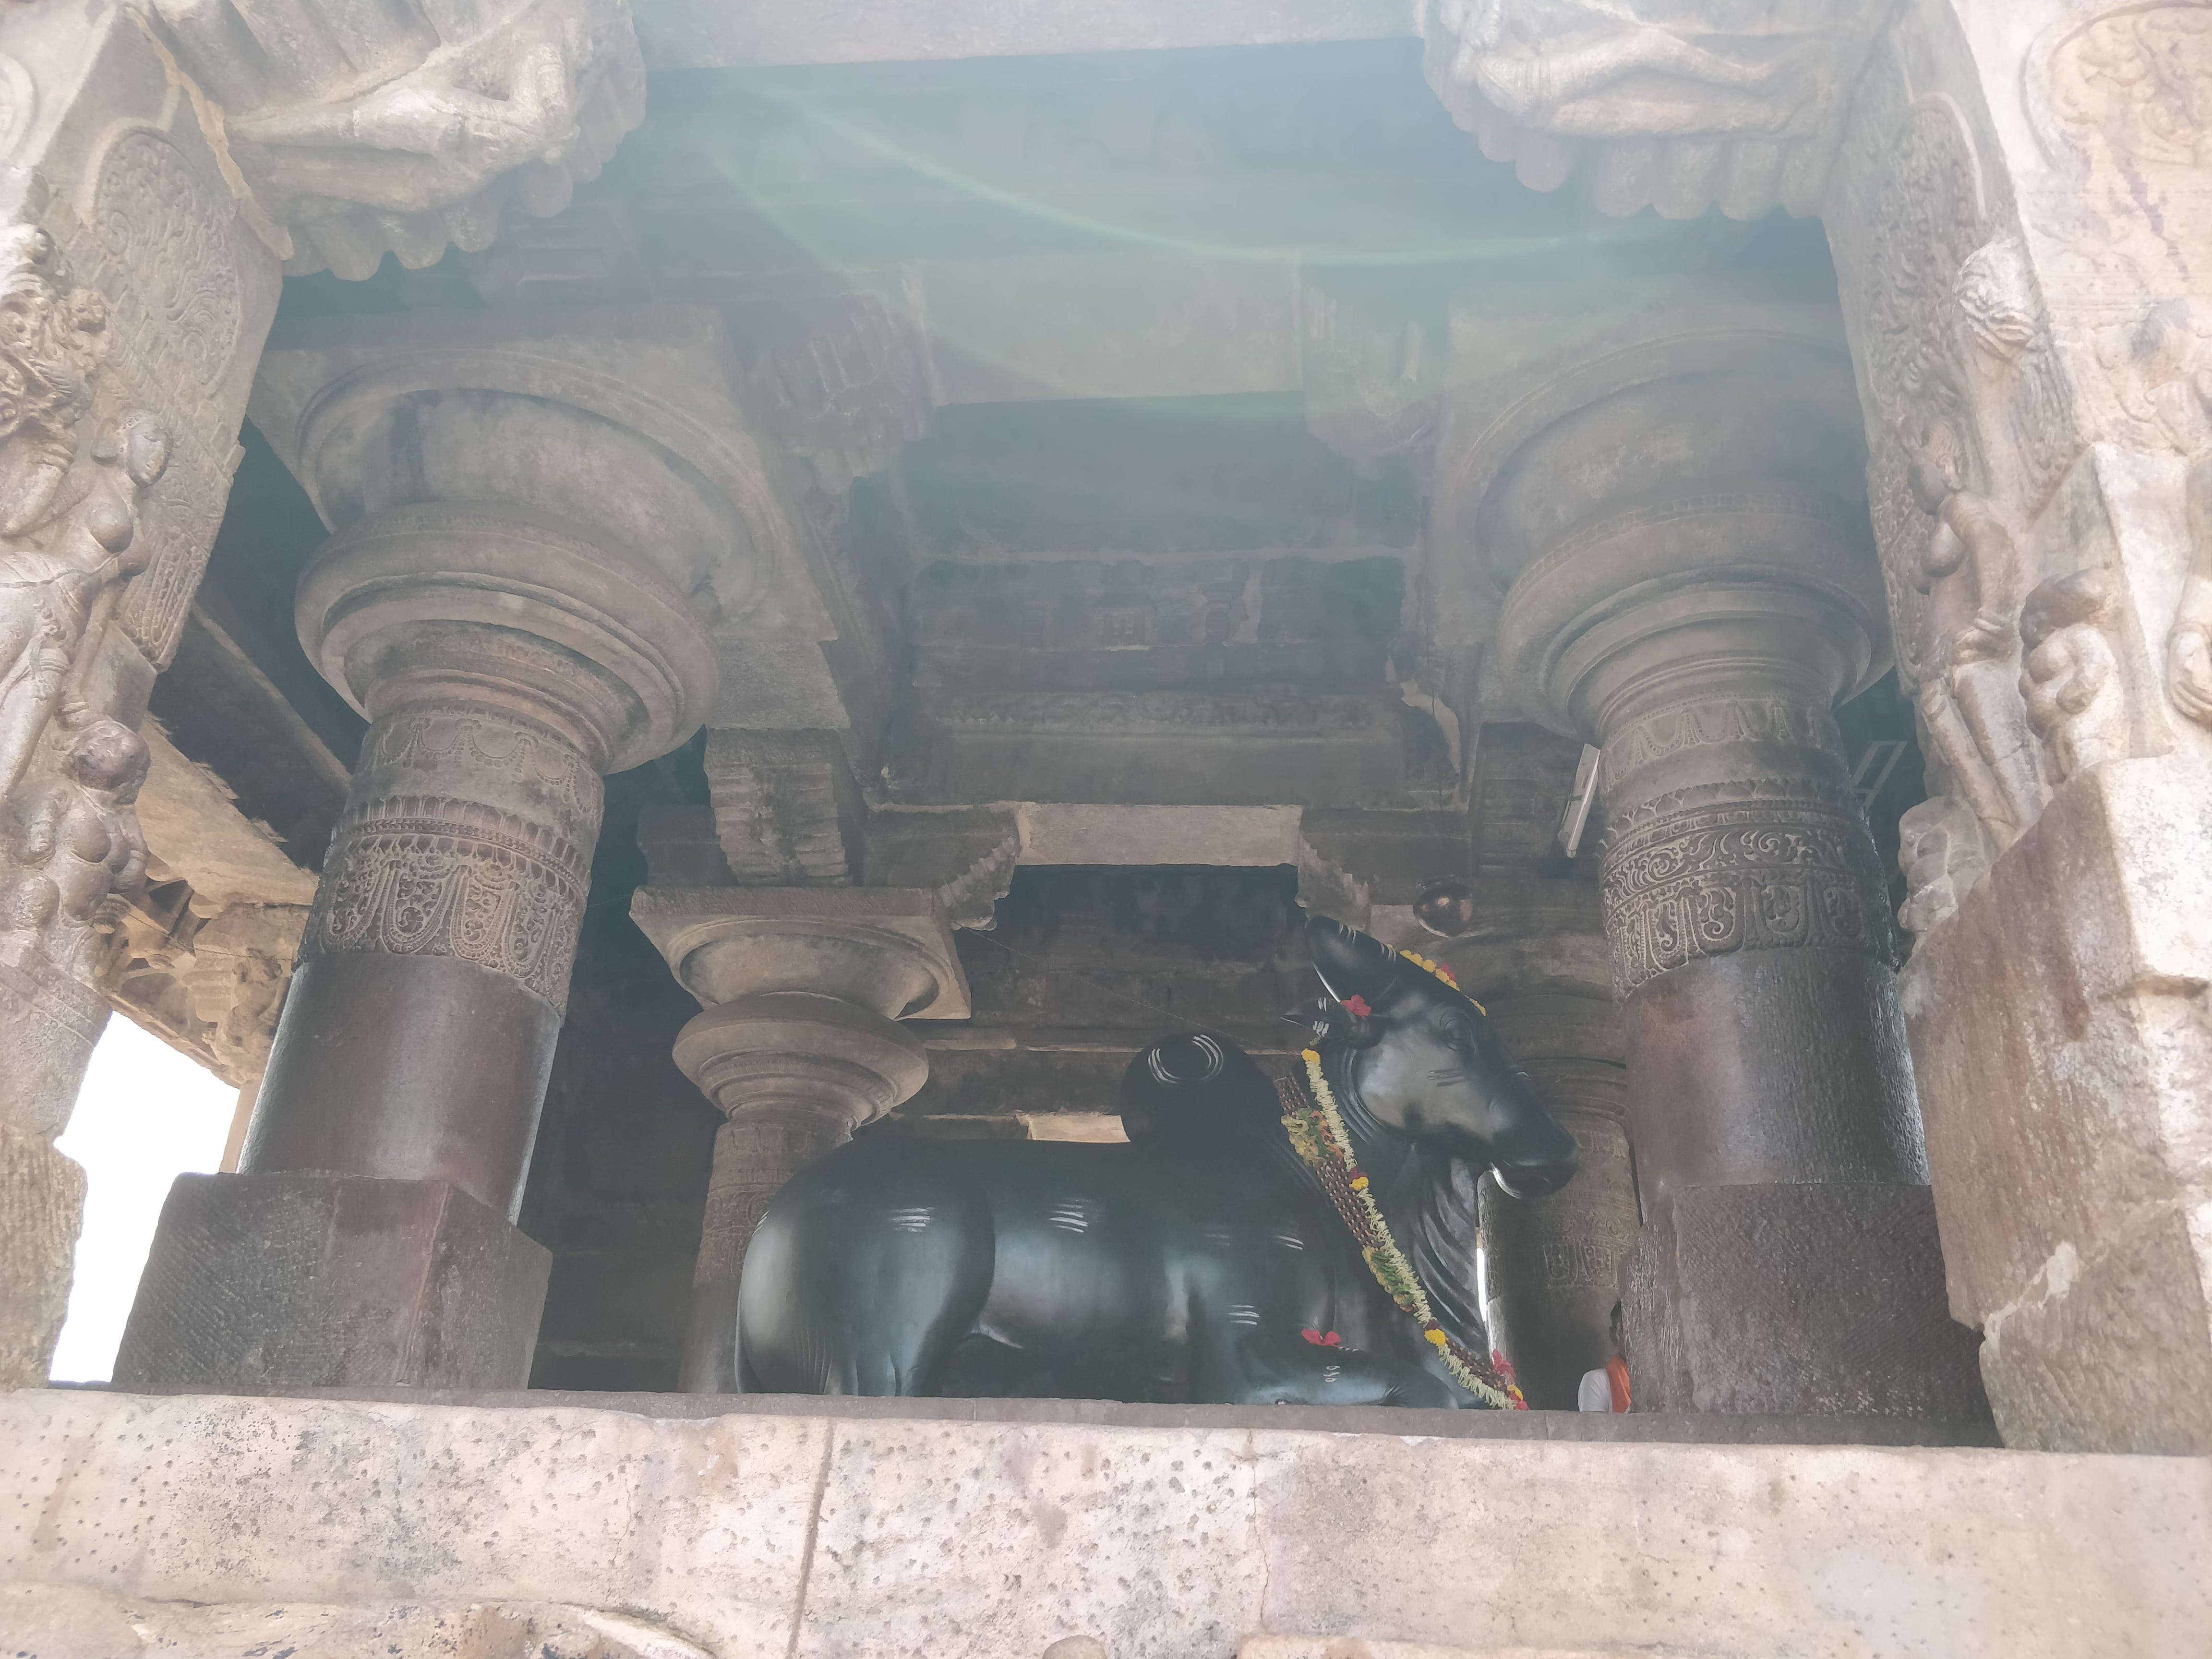 huge Nandi statue inside the complex